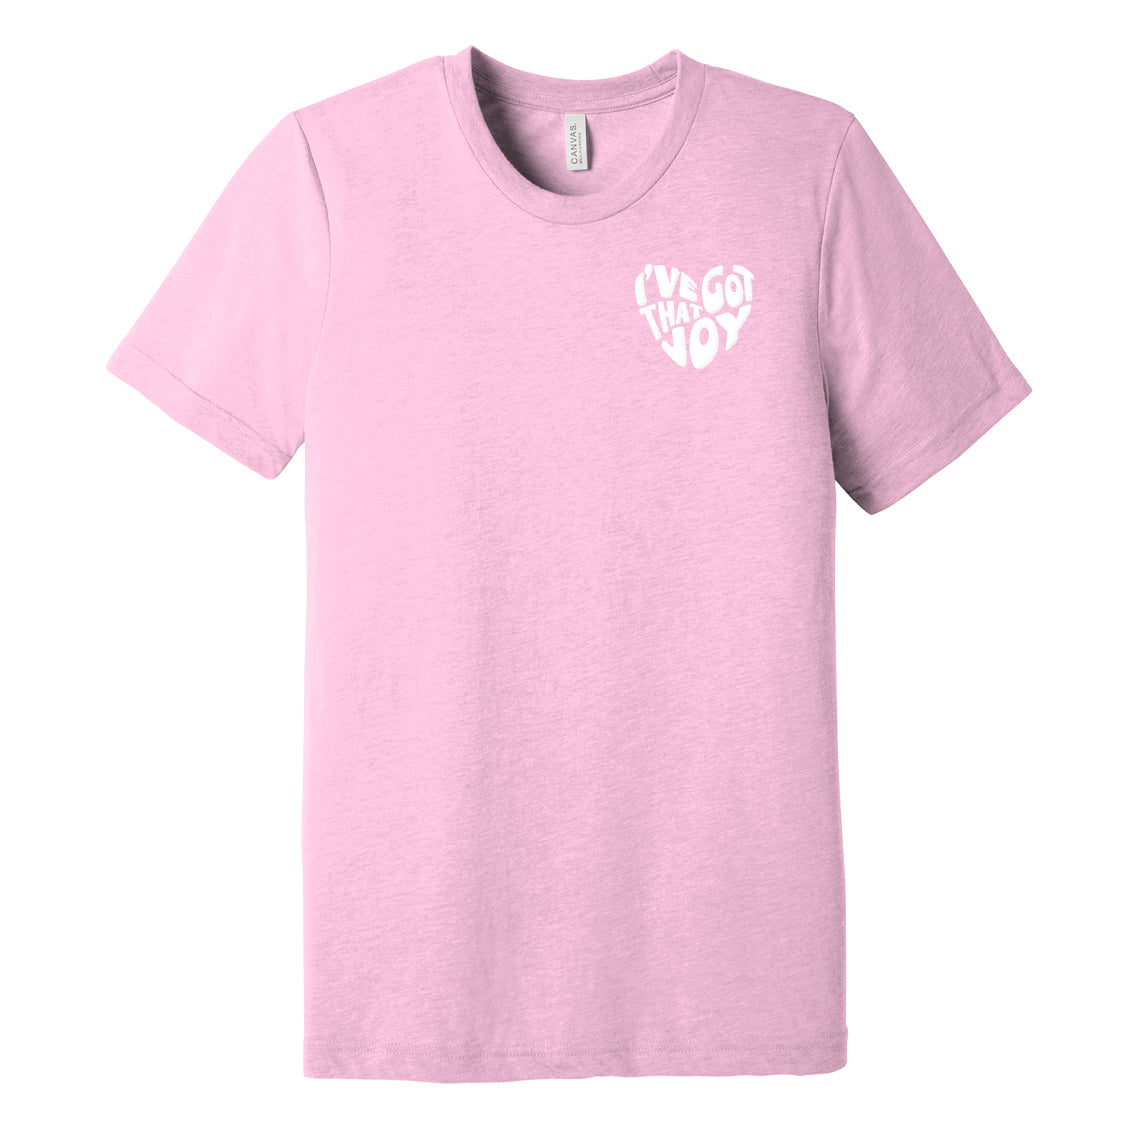 "I've Got That Joy" Puff Print Lilac T-Shirt